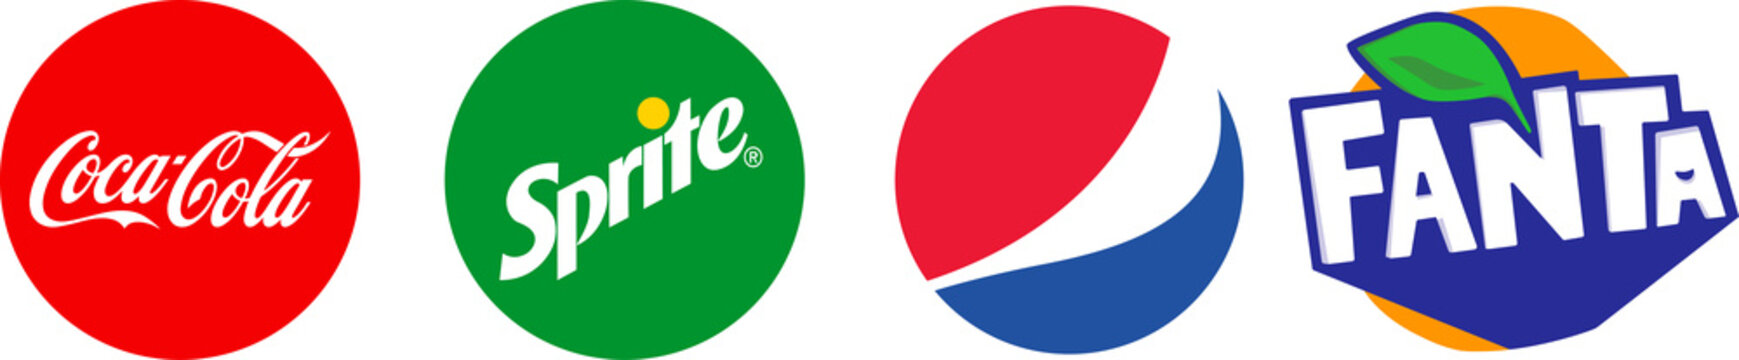 Carbonated soft drink logo set. Coca Cola, Pepsi, Fanta, Sprite drinks icons. Top drink company brand logo set on transparent background. PNG image